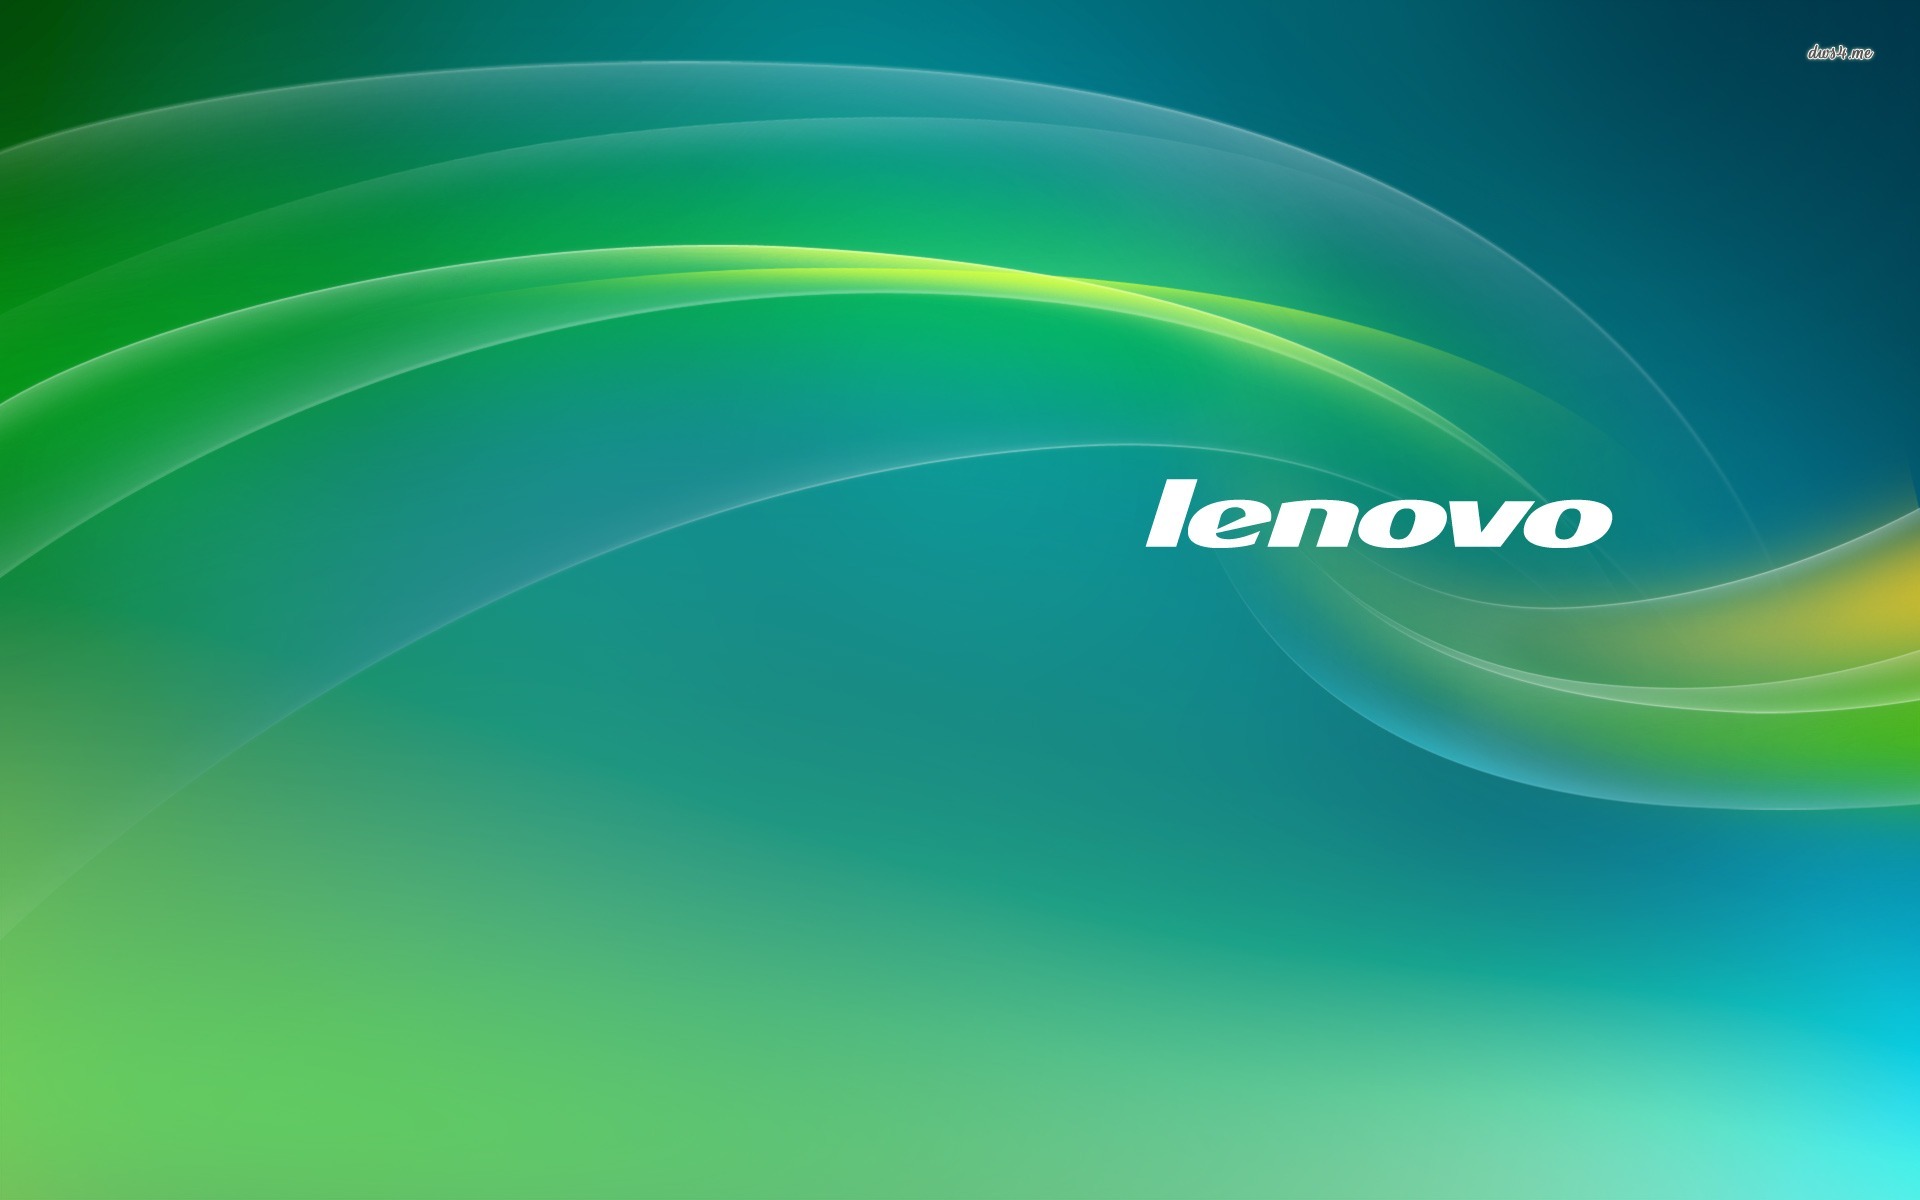 Lenovo Wallpaper - wallpaper.